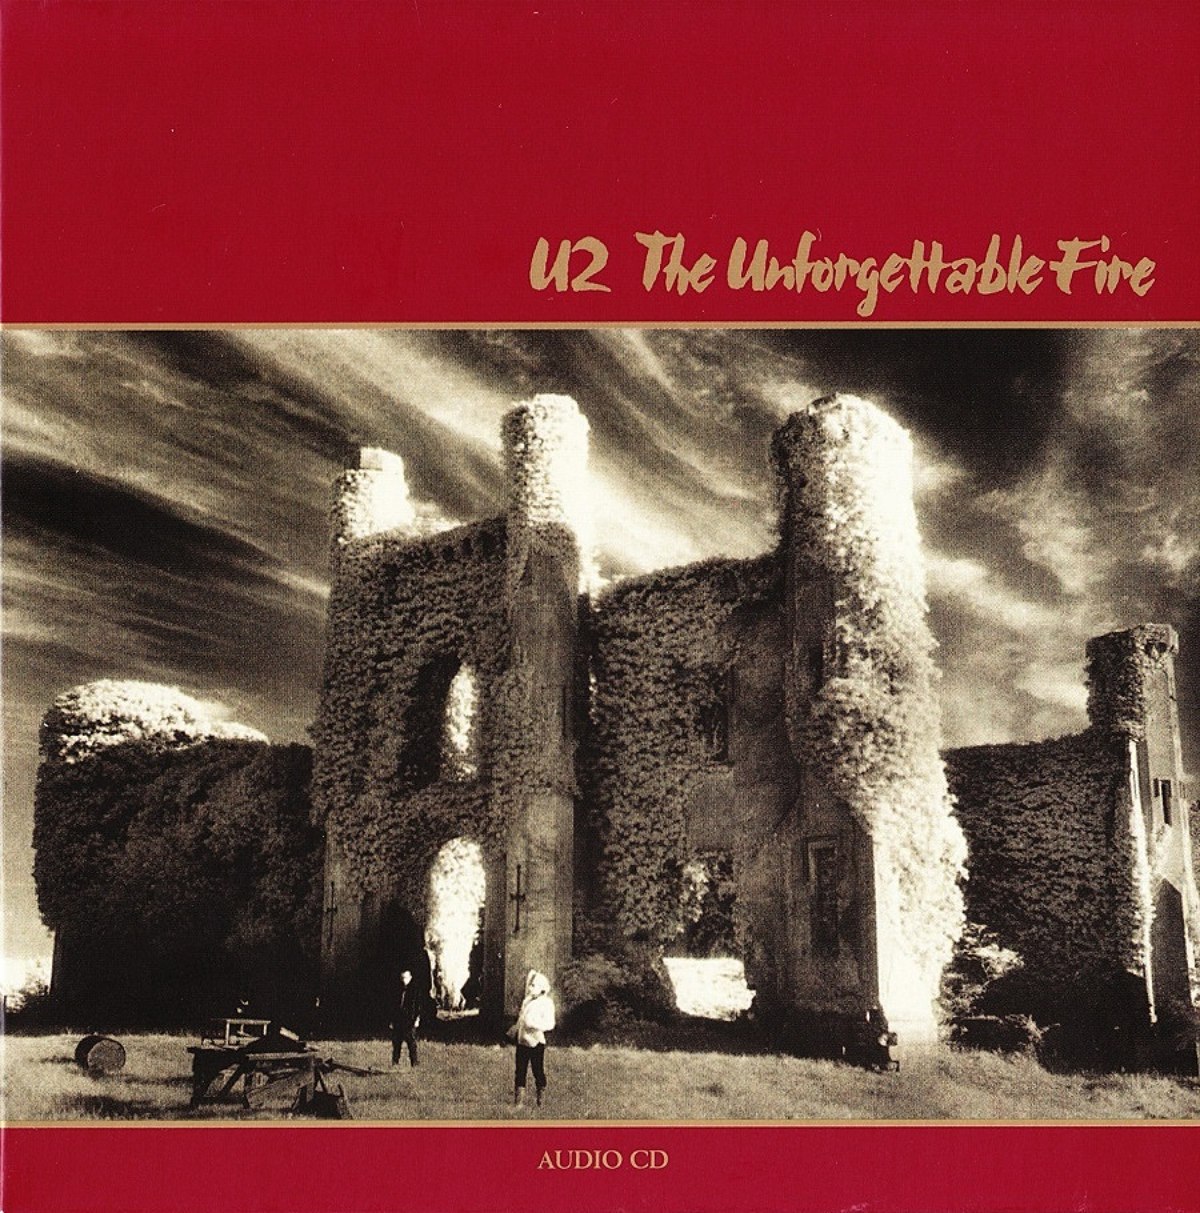 Capa do álbum "The Unforgettable Fire" do U2